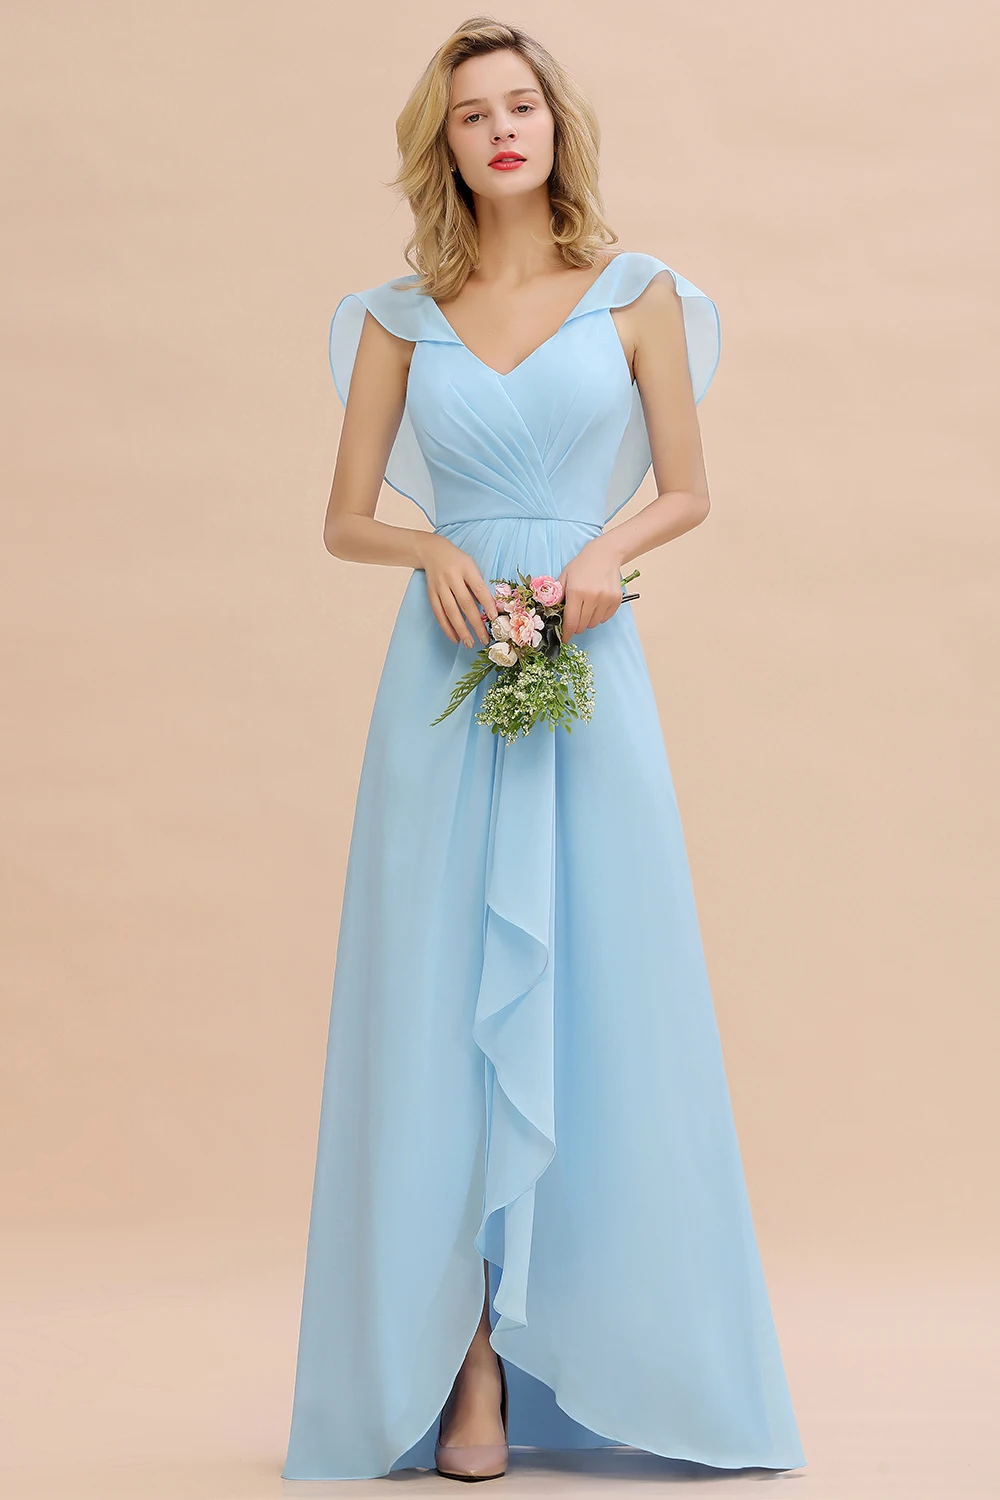 bridesmaid dress sky blue Compra dress sky blue con gratis en AliExpress version